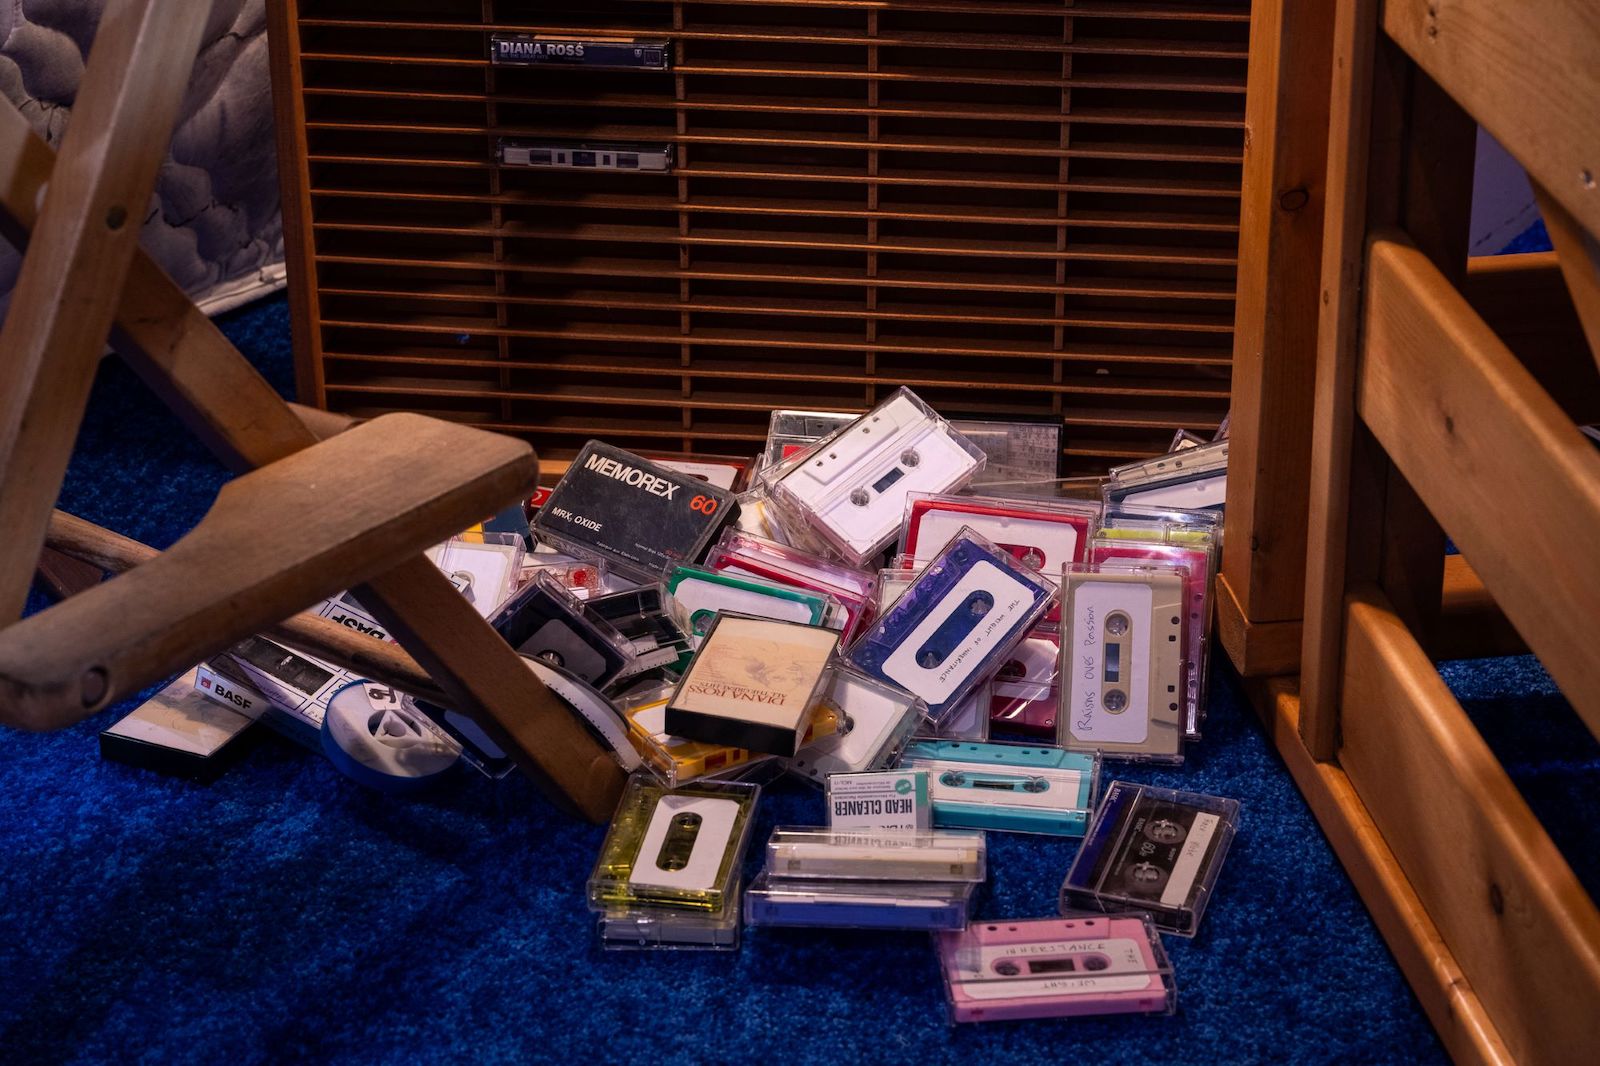 A pile of random cassette tapes on a blue shag carpet.